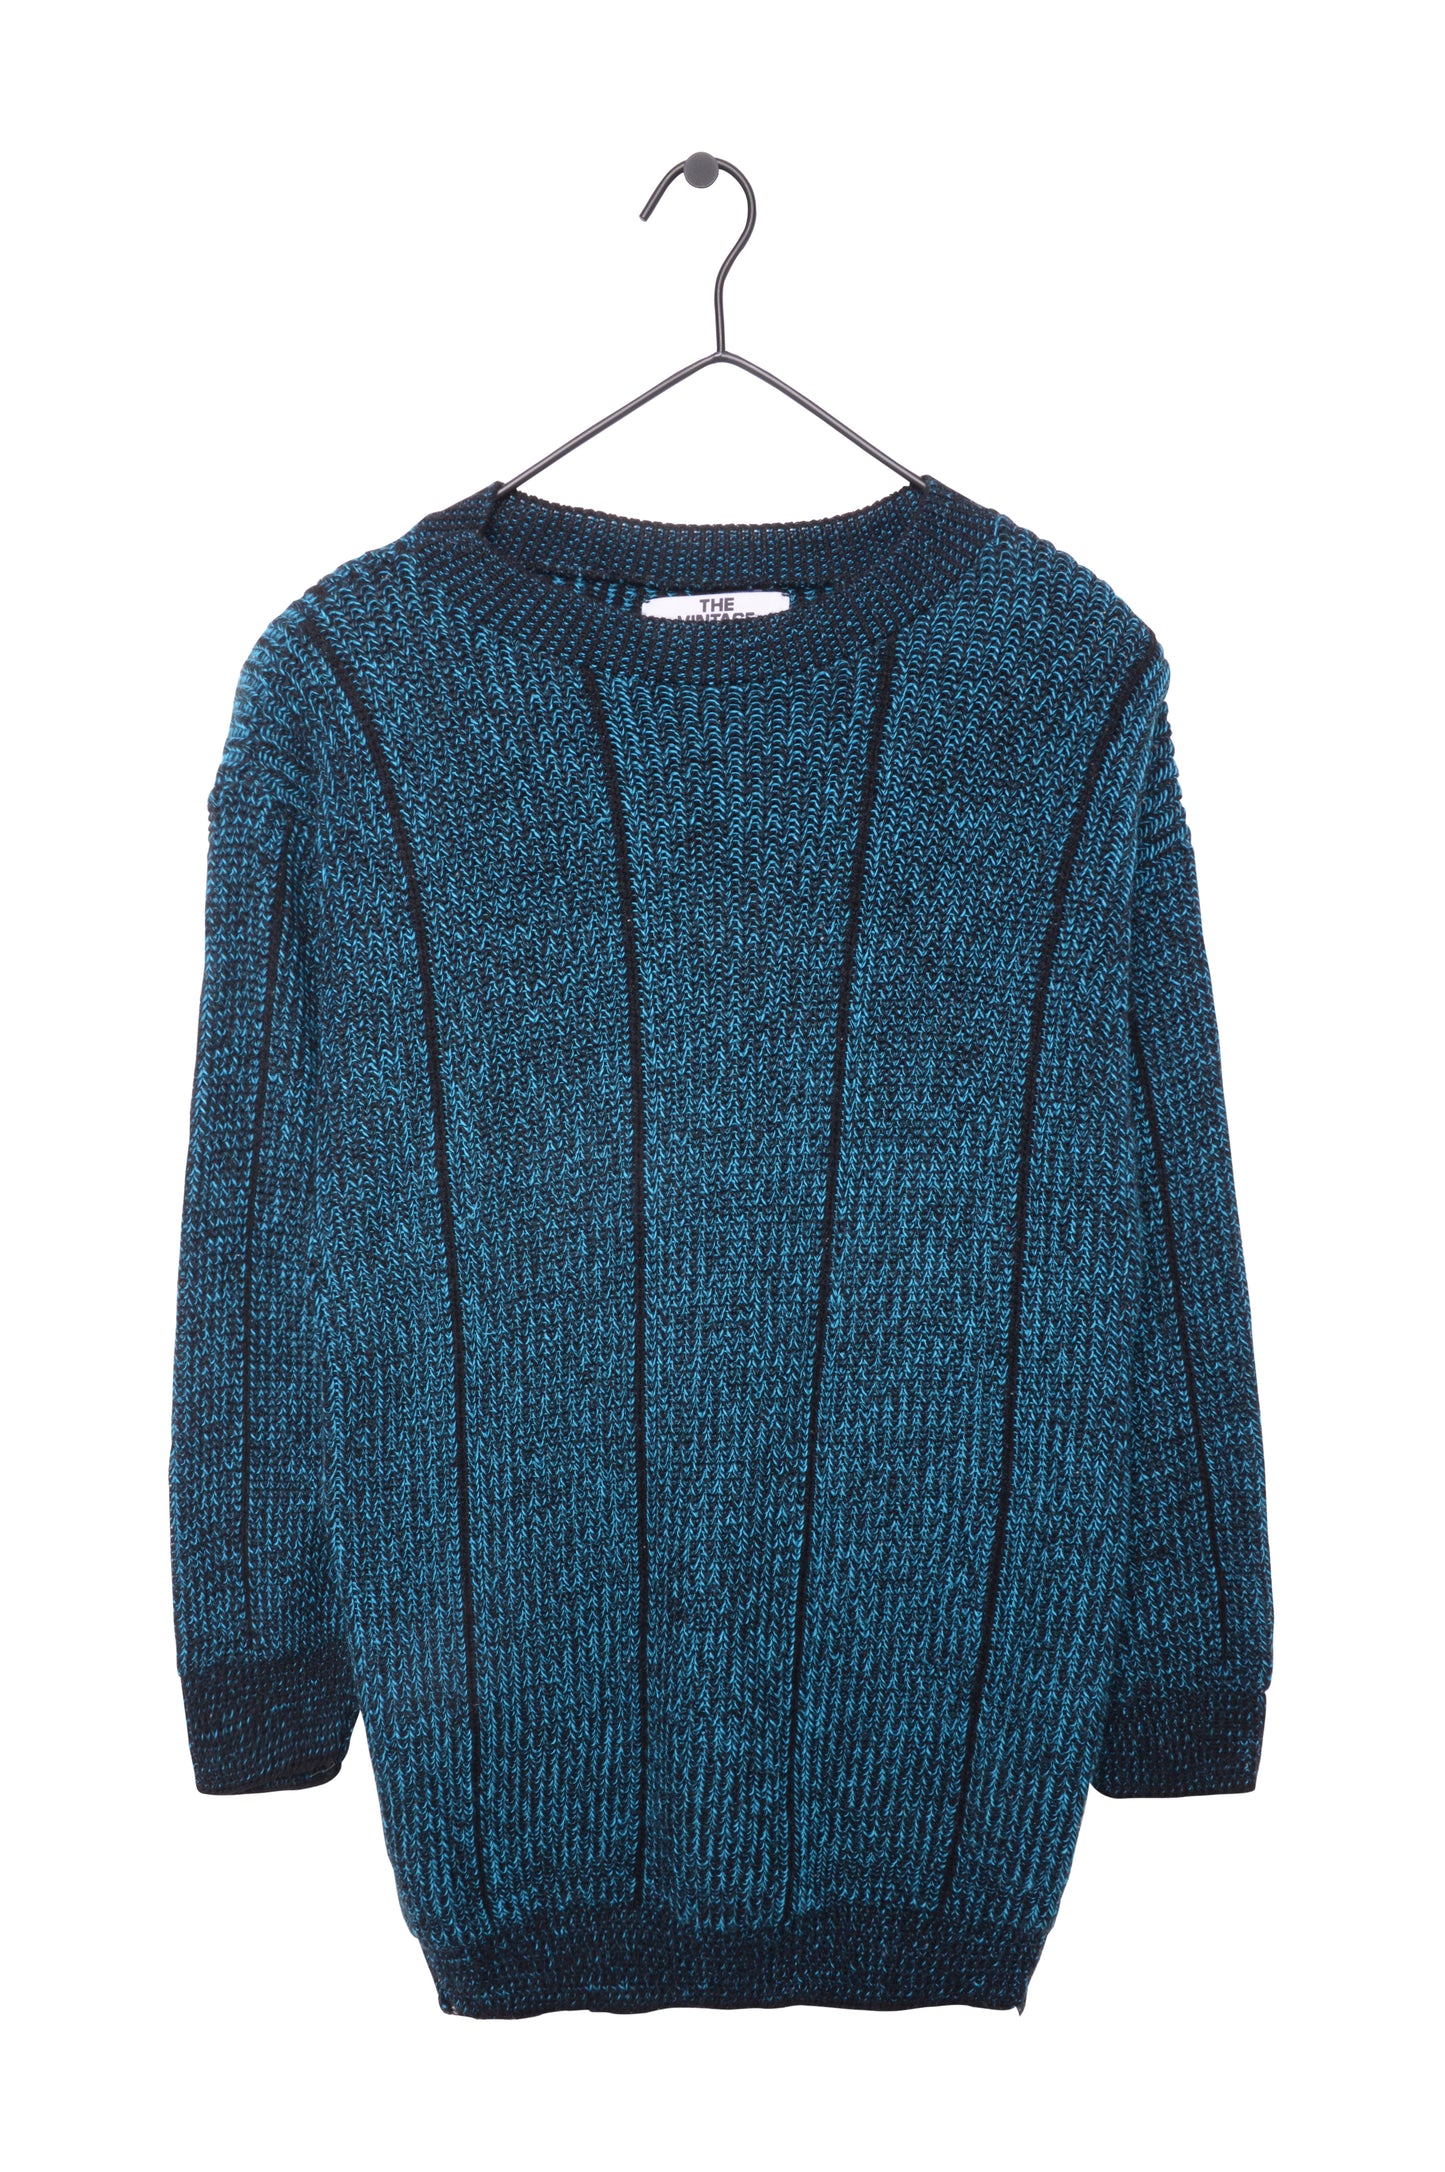 Marled Teal Sweater USA